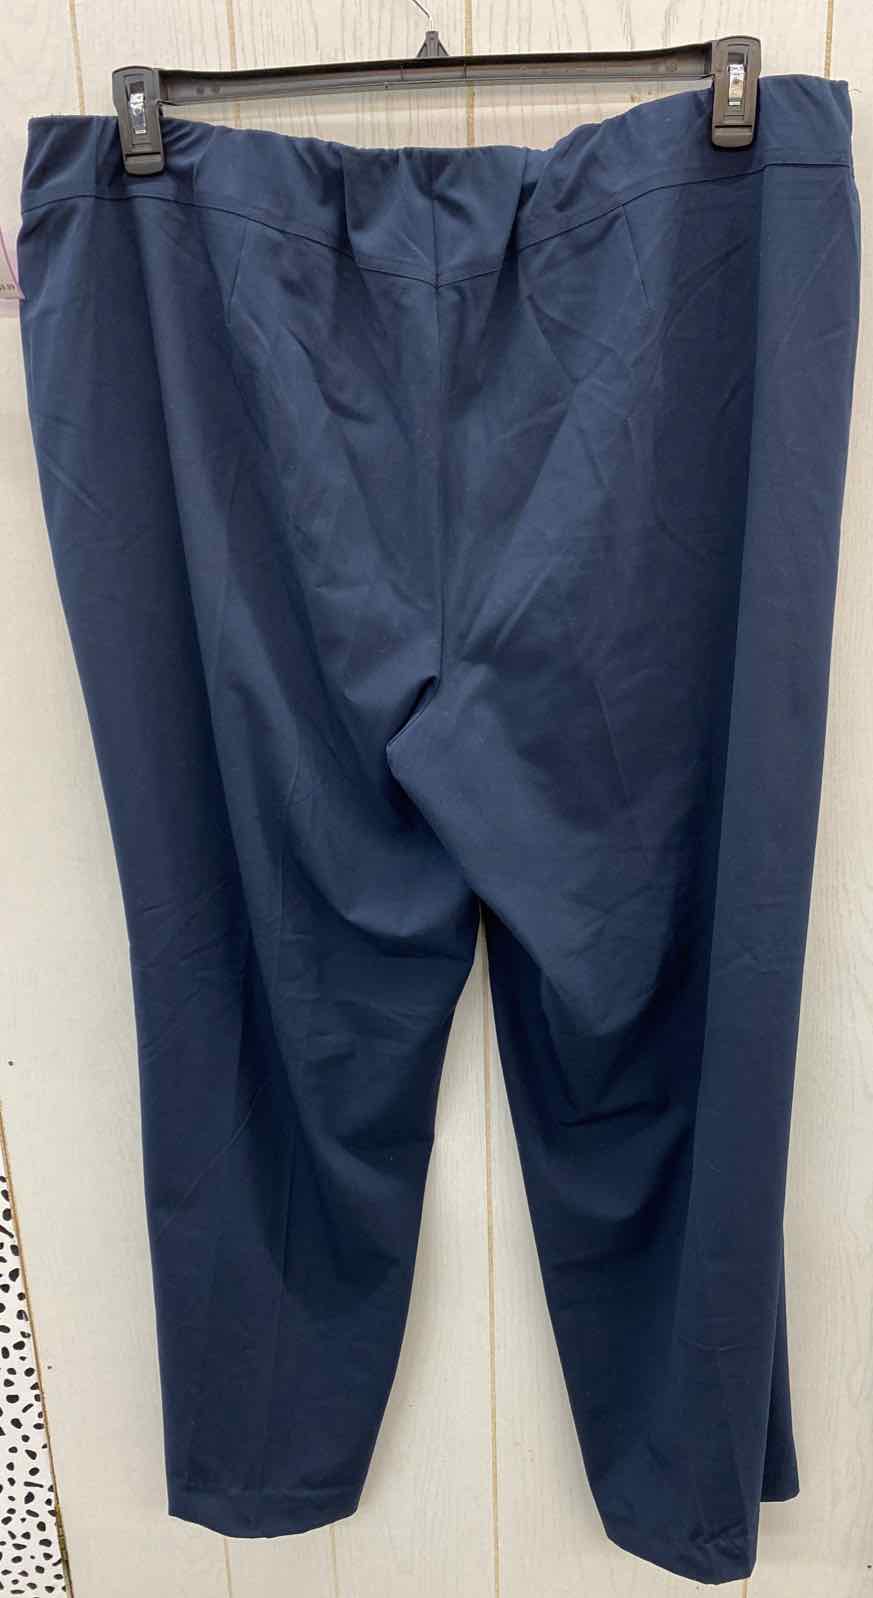 Talbots Navy Womens Size 24W Pants